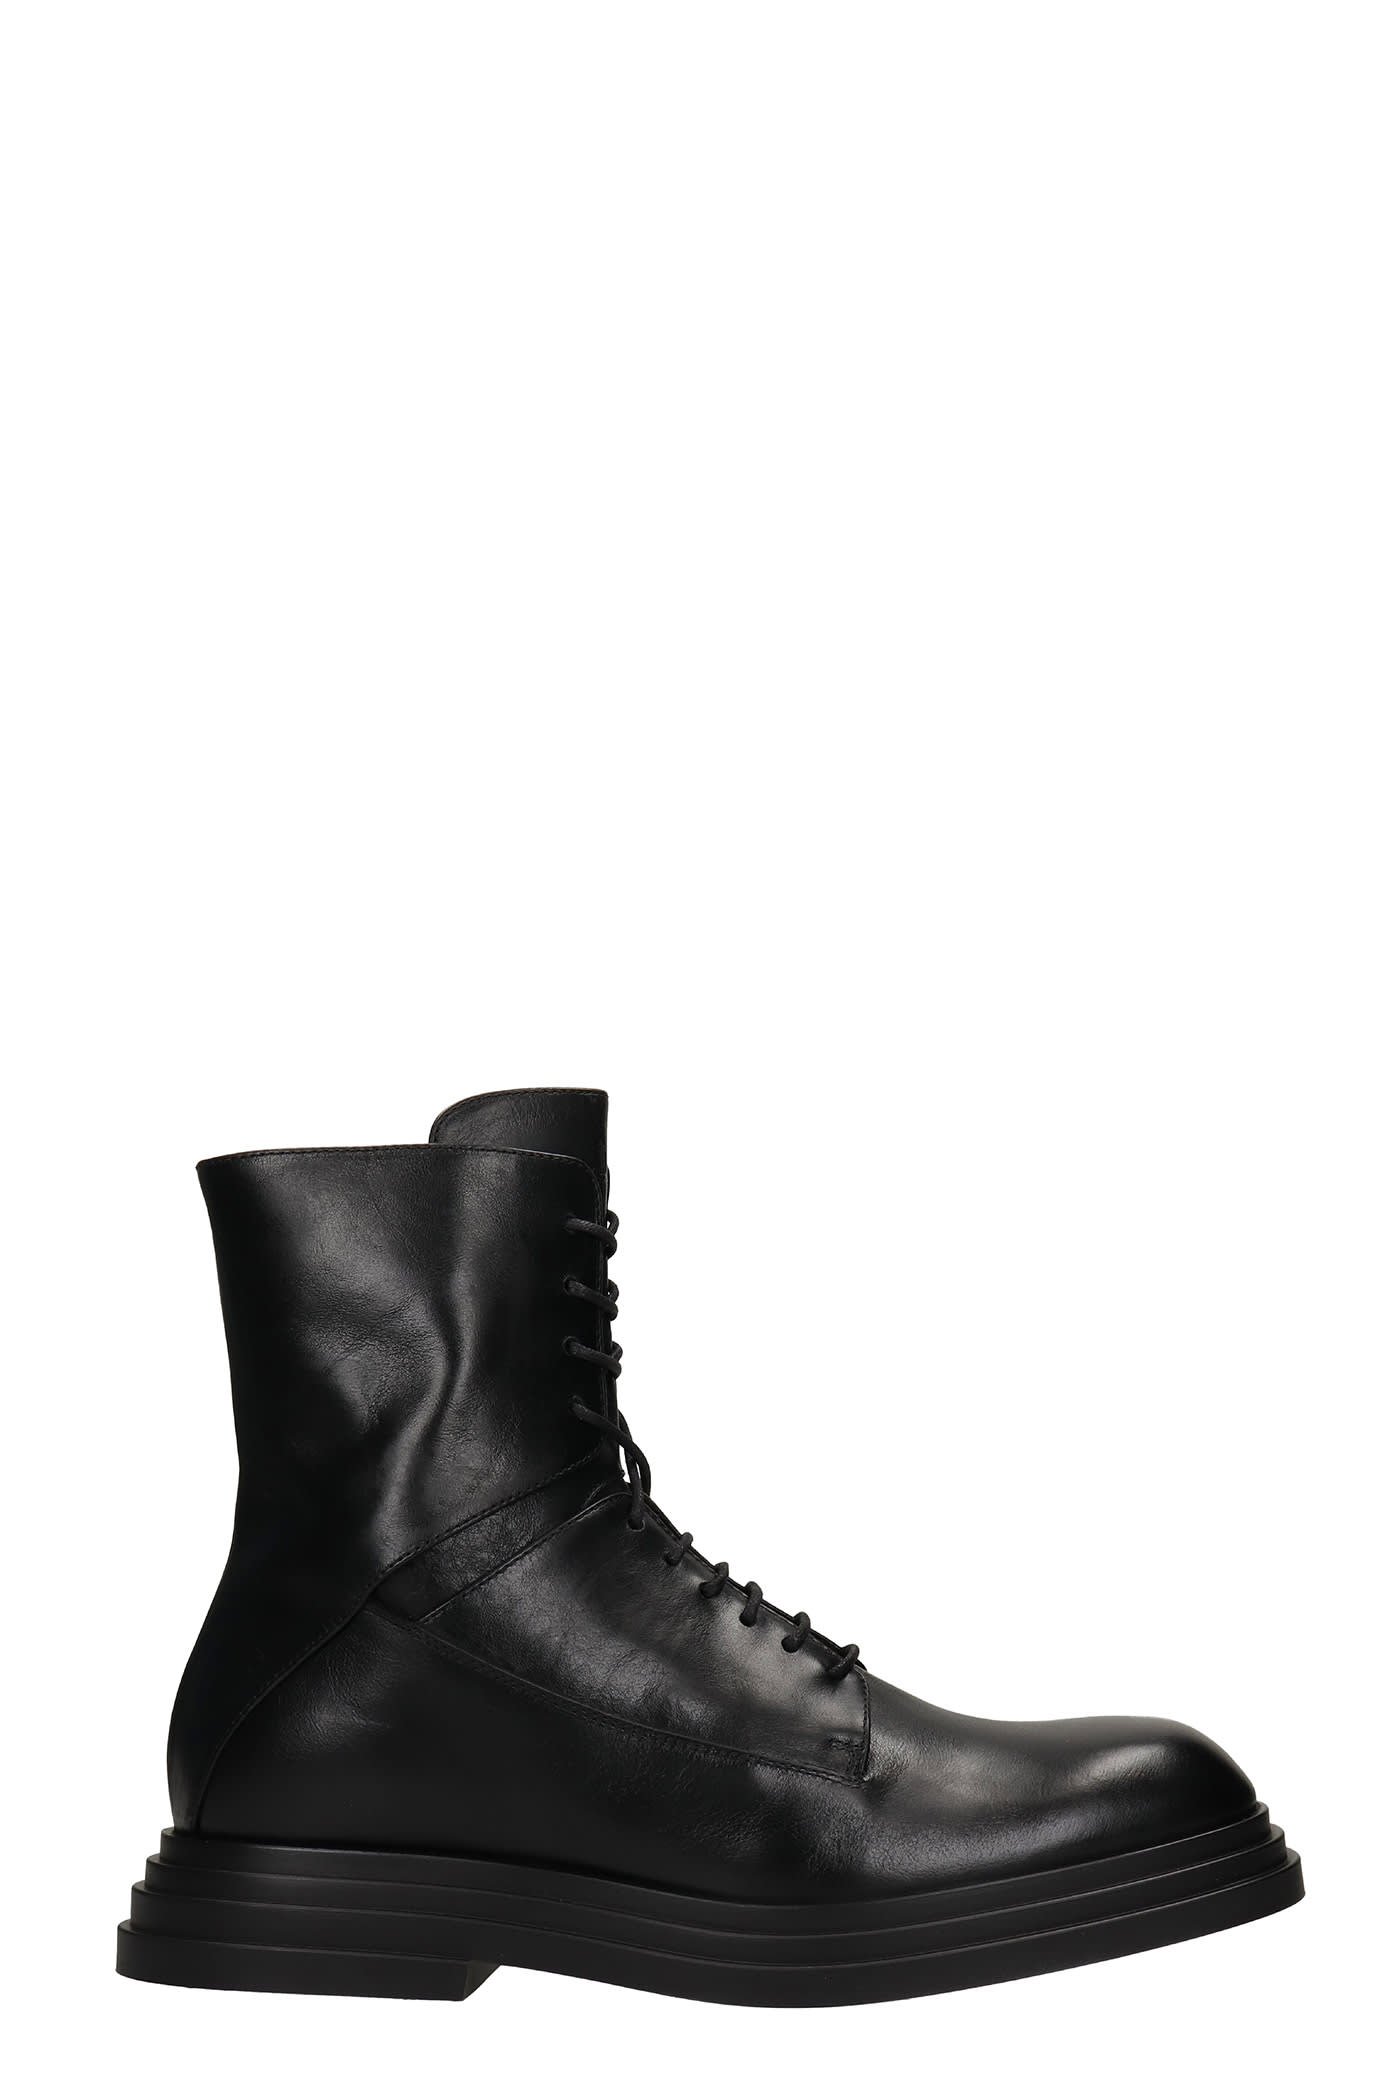 Cesare Paciotti Anfibio Combat Boots In Black Leather